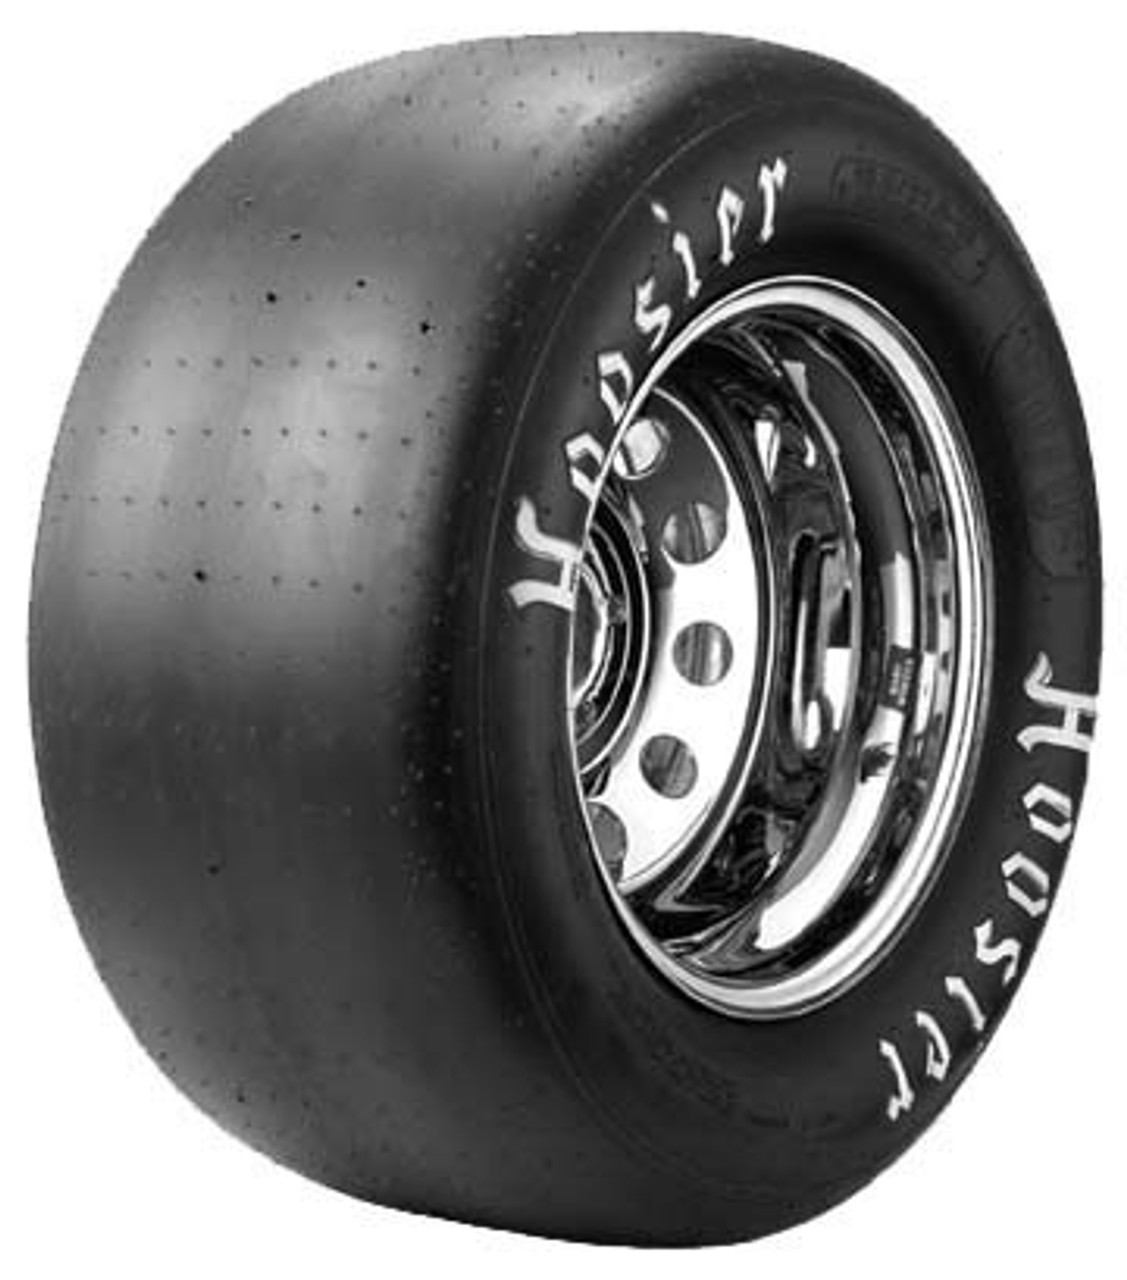 Hoosier Circuit Racing Tire